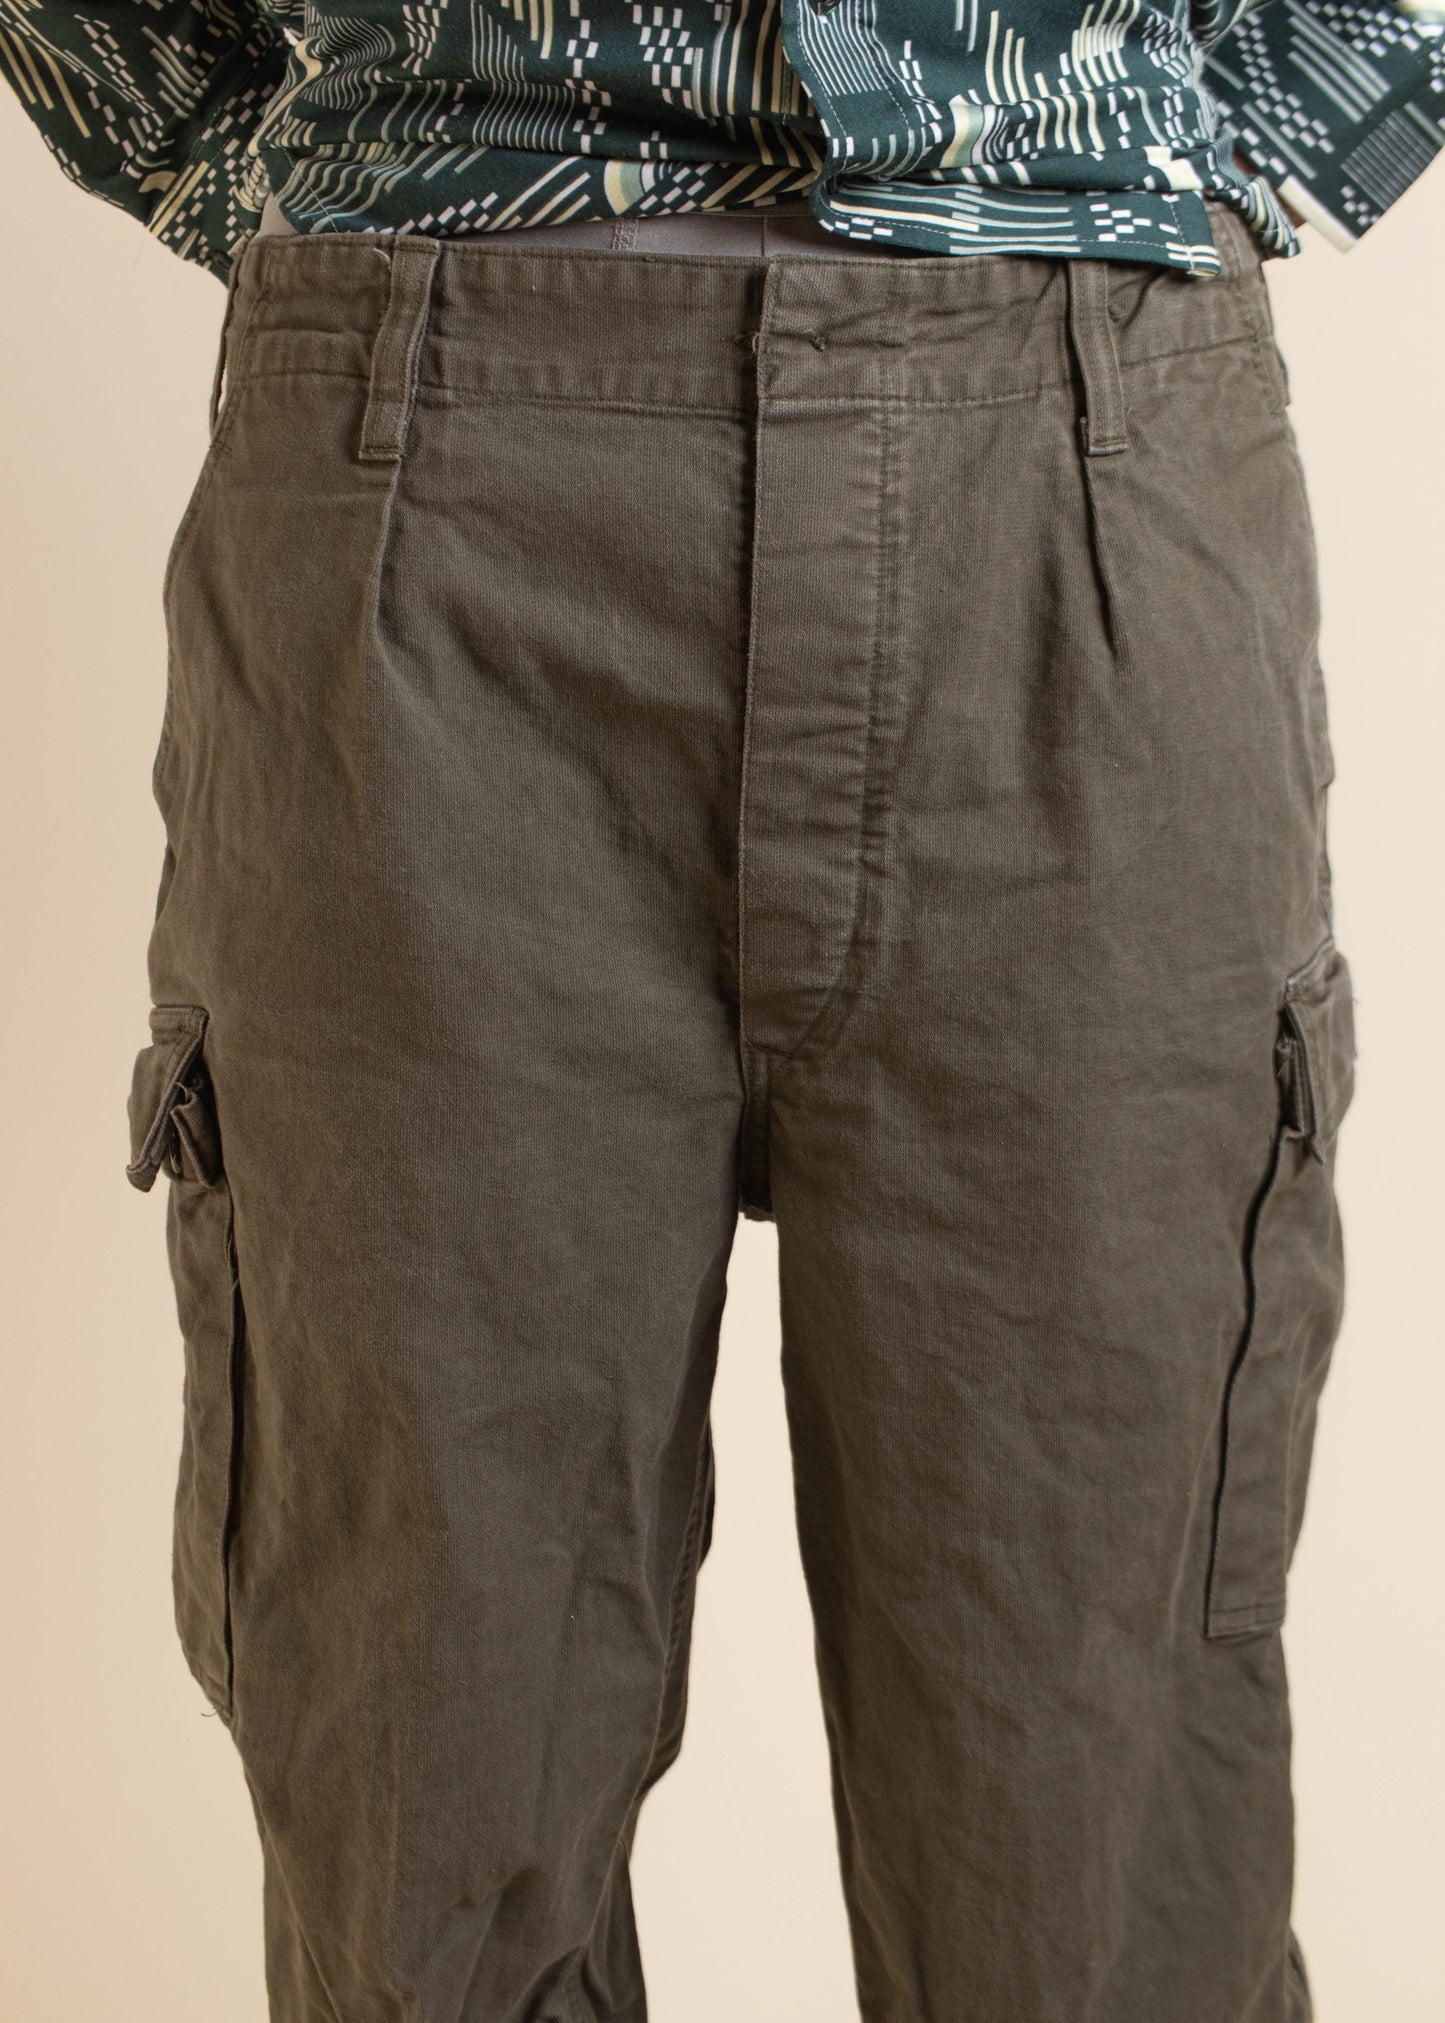 1980s German Military Moleskin Cargo Pants Size Women's 33 Men's 36